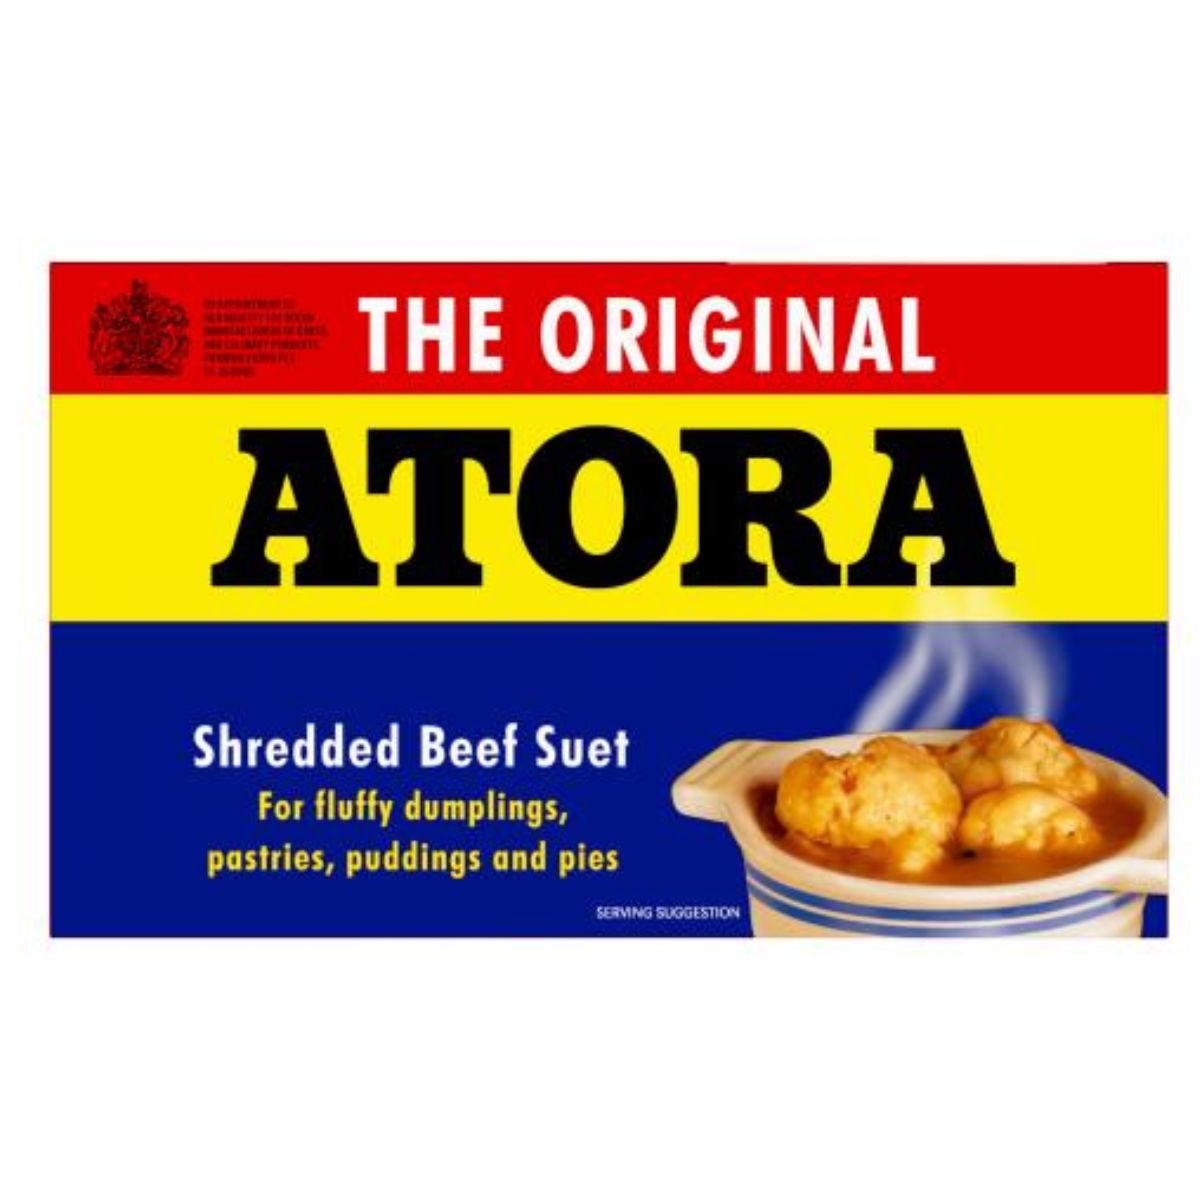 The Atora - The Original Shredded Beef Suet - 200g shredded beef stew.